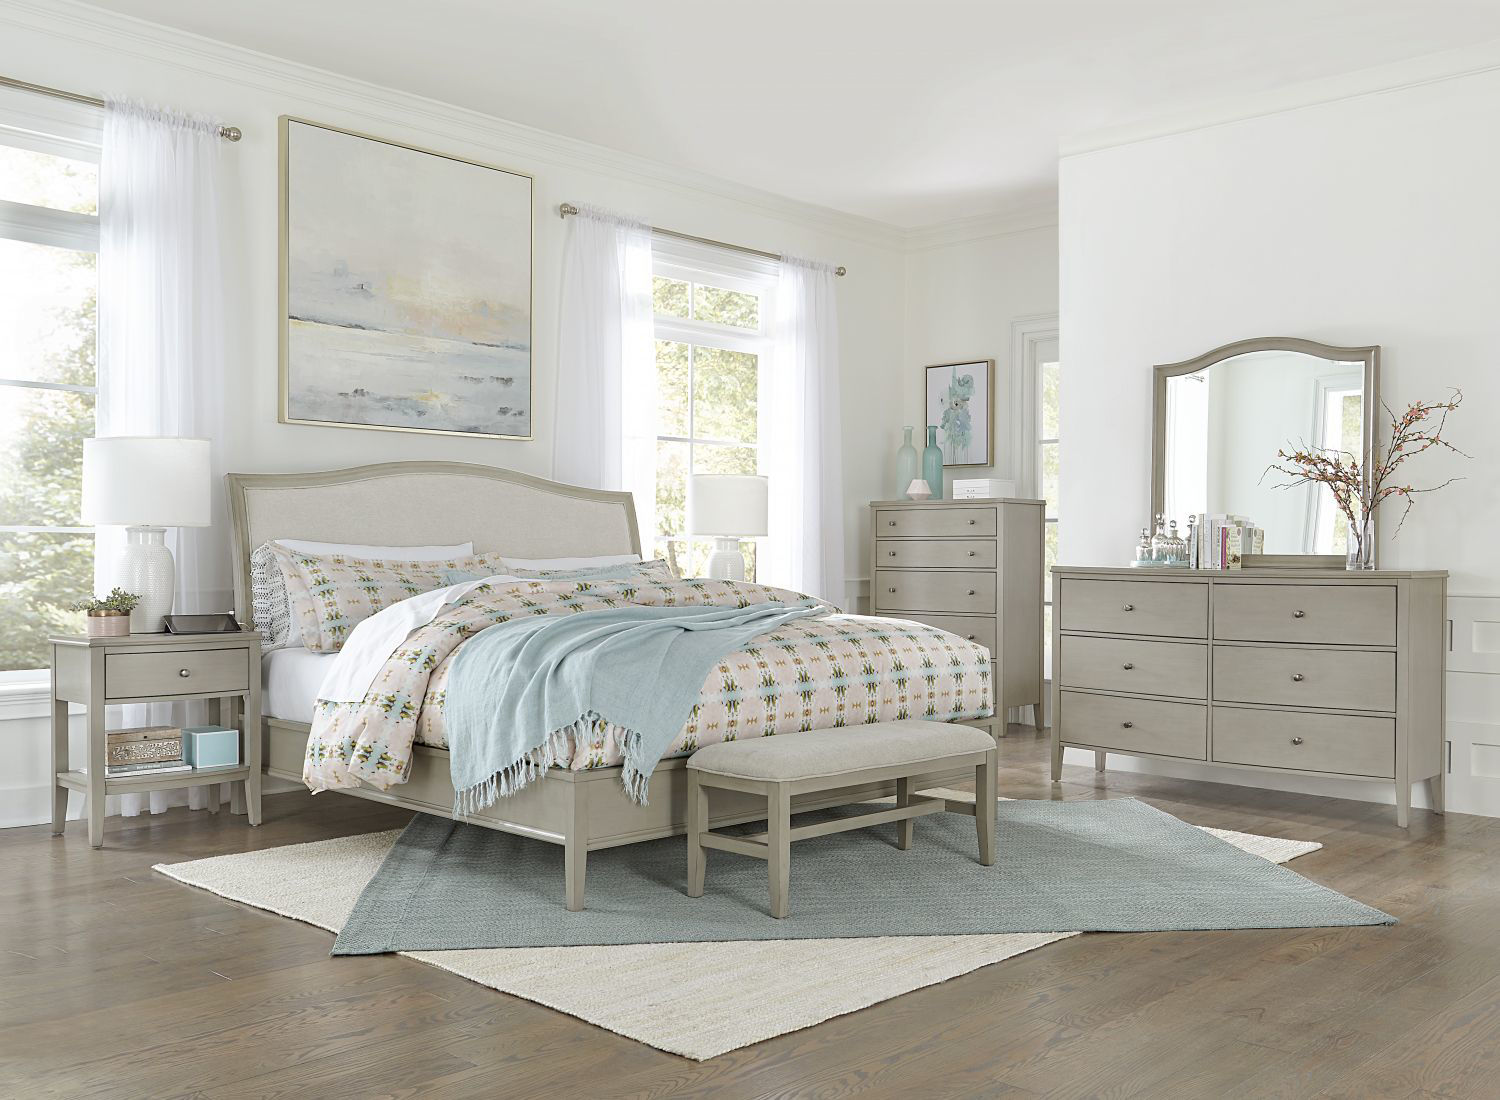 charlotte brand bedroom furniture